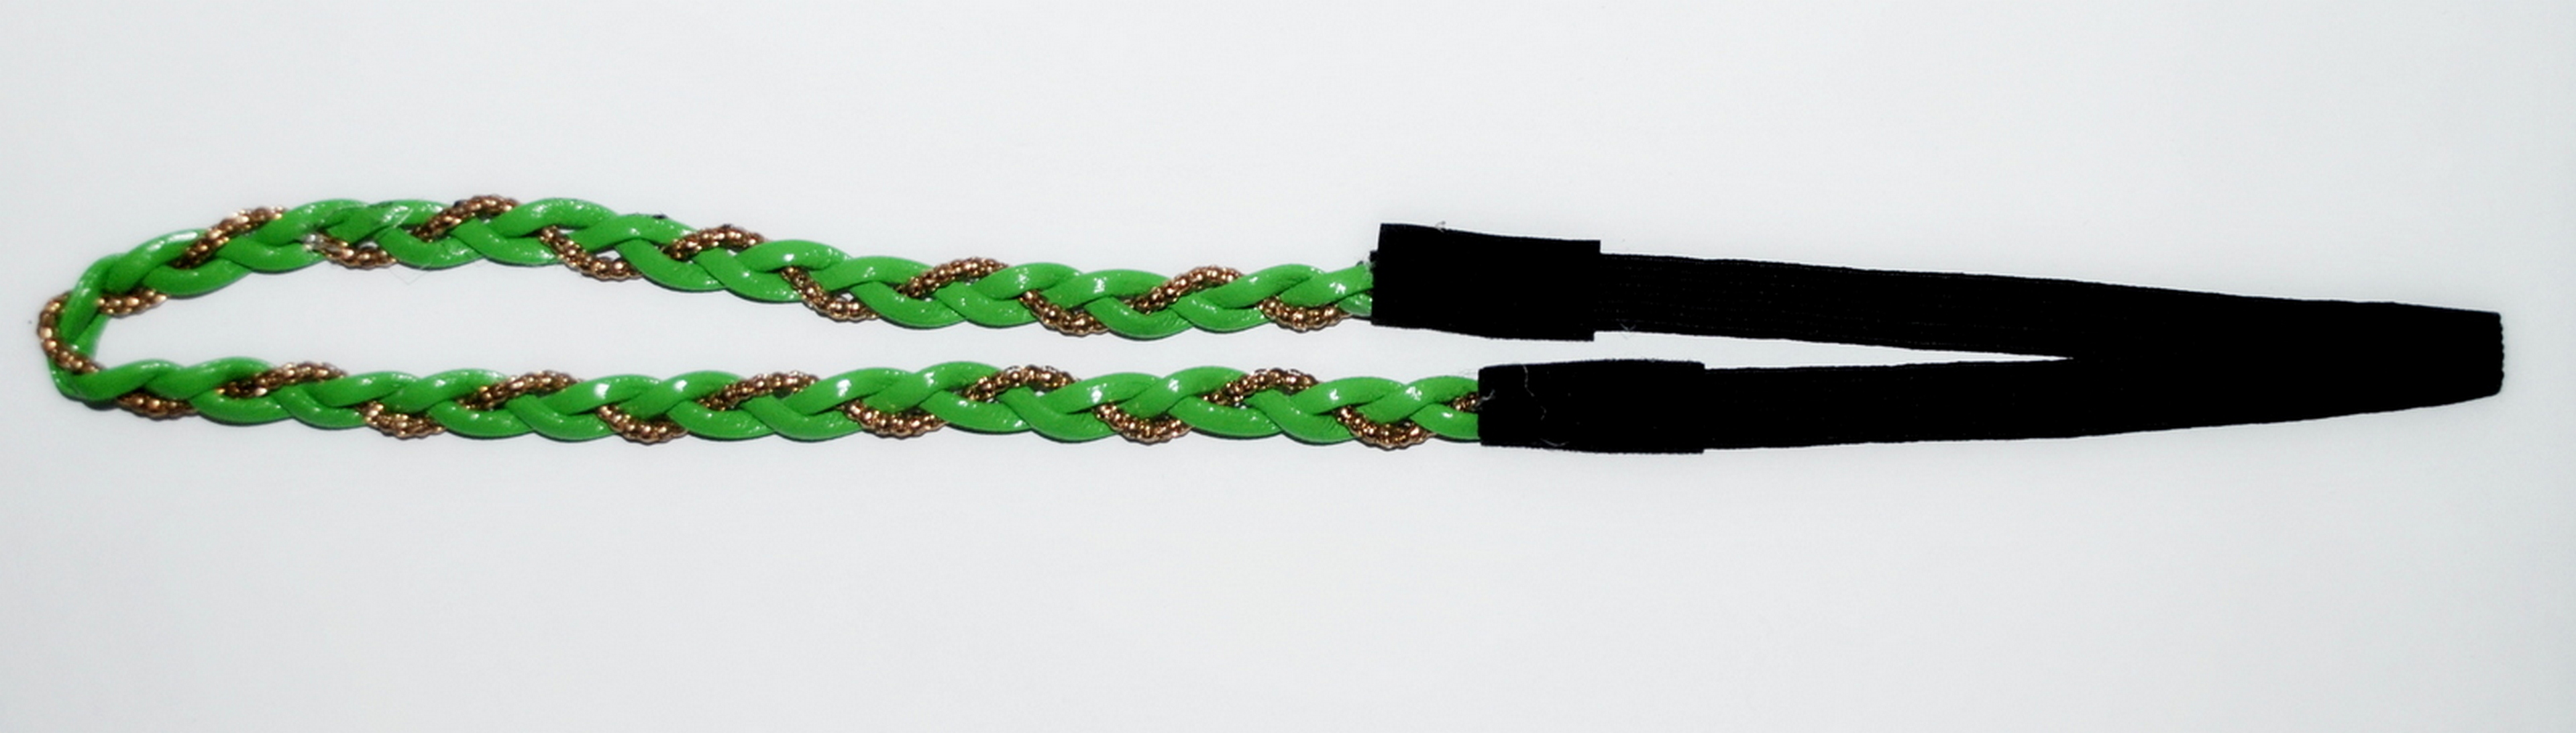 Повязка для волос Fashion Jewelry зеленая с золотой нитью fashion angel for cross rosary beads bracelet pendant religious jewelry gi